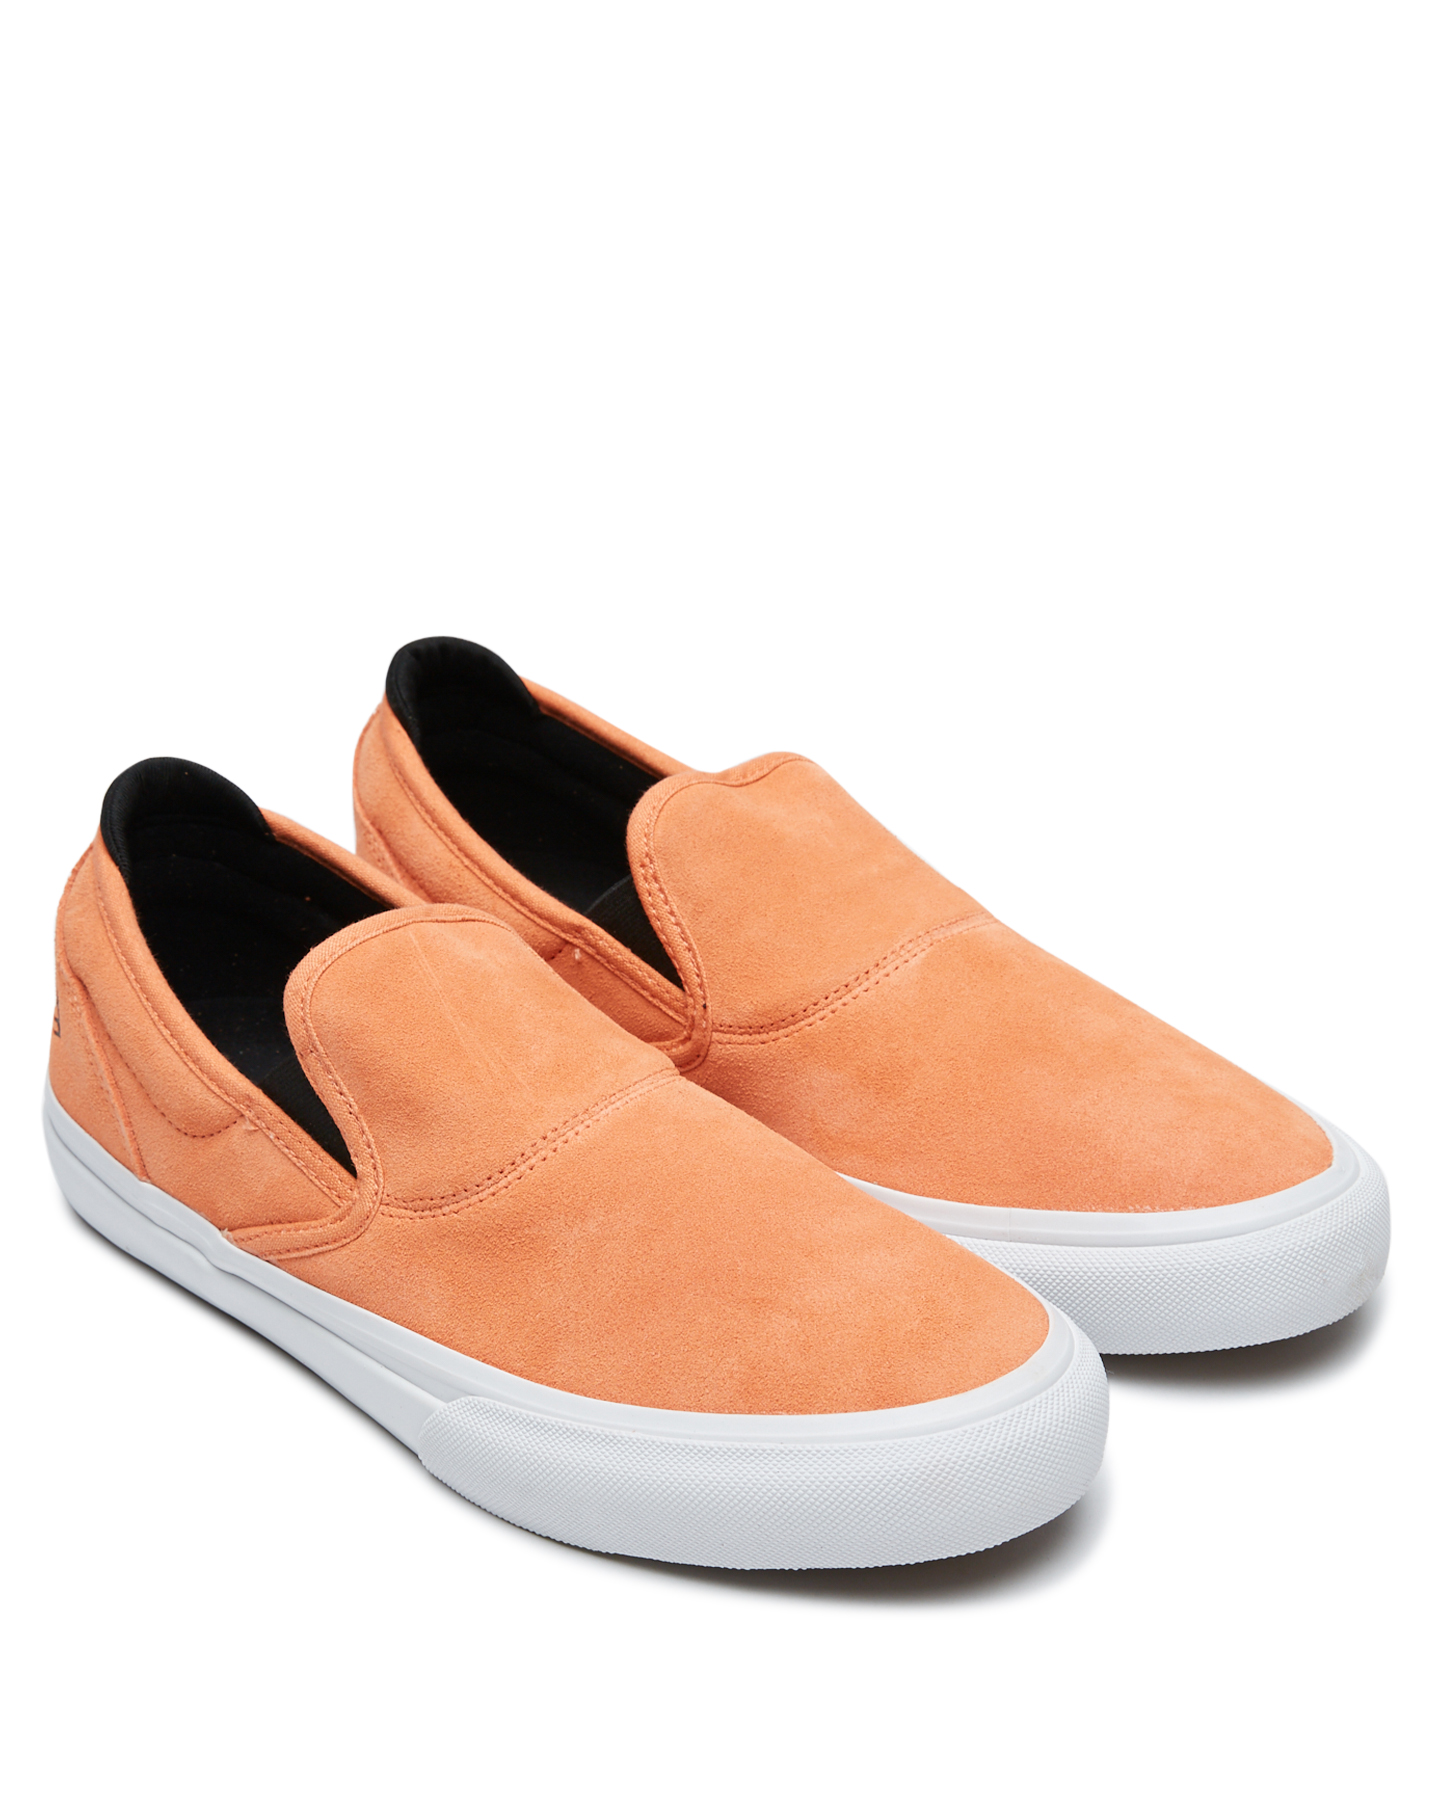 peach slip on shoes